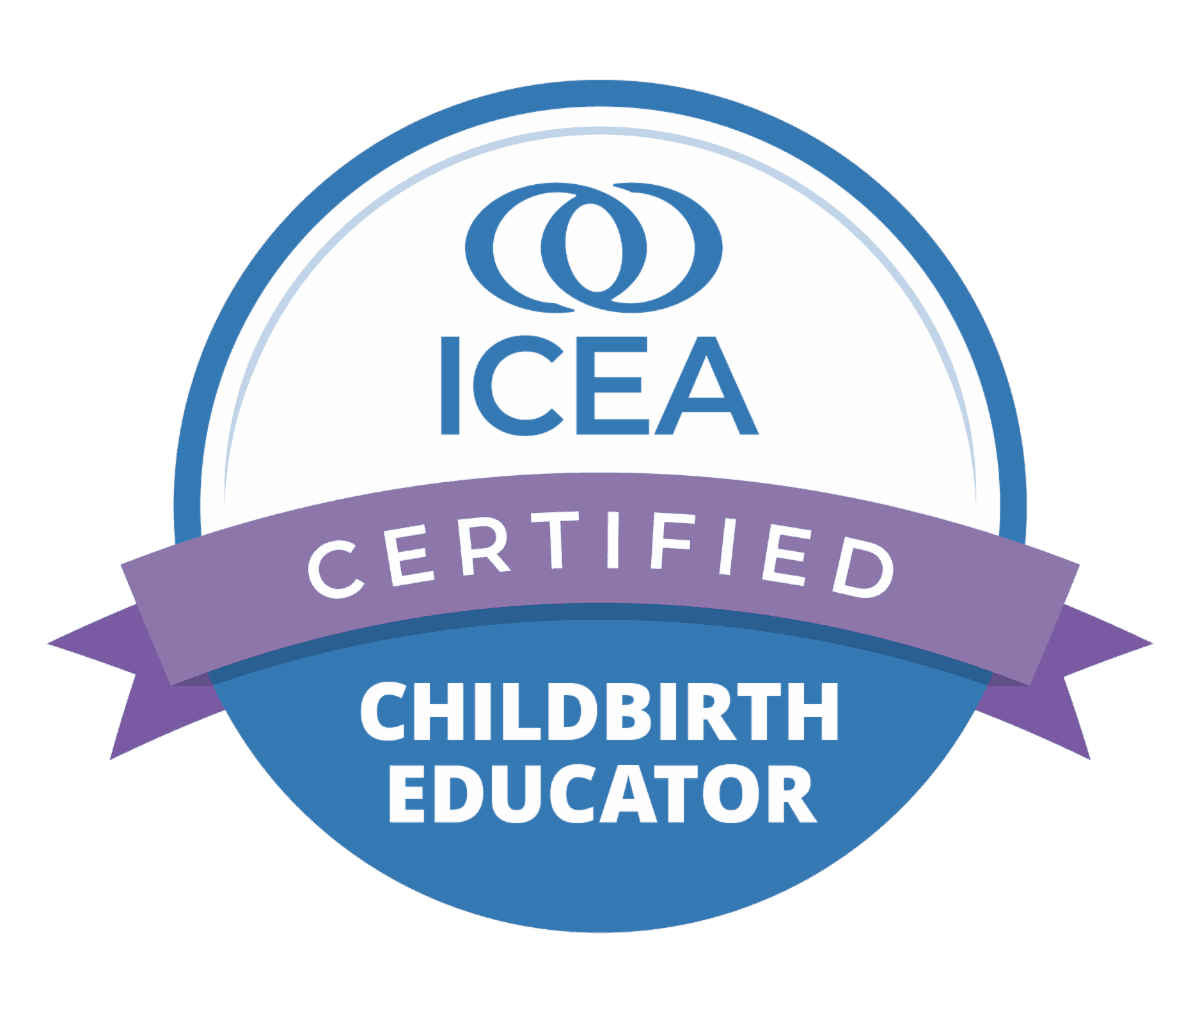 ICEA Certified Childbirth Educator